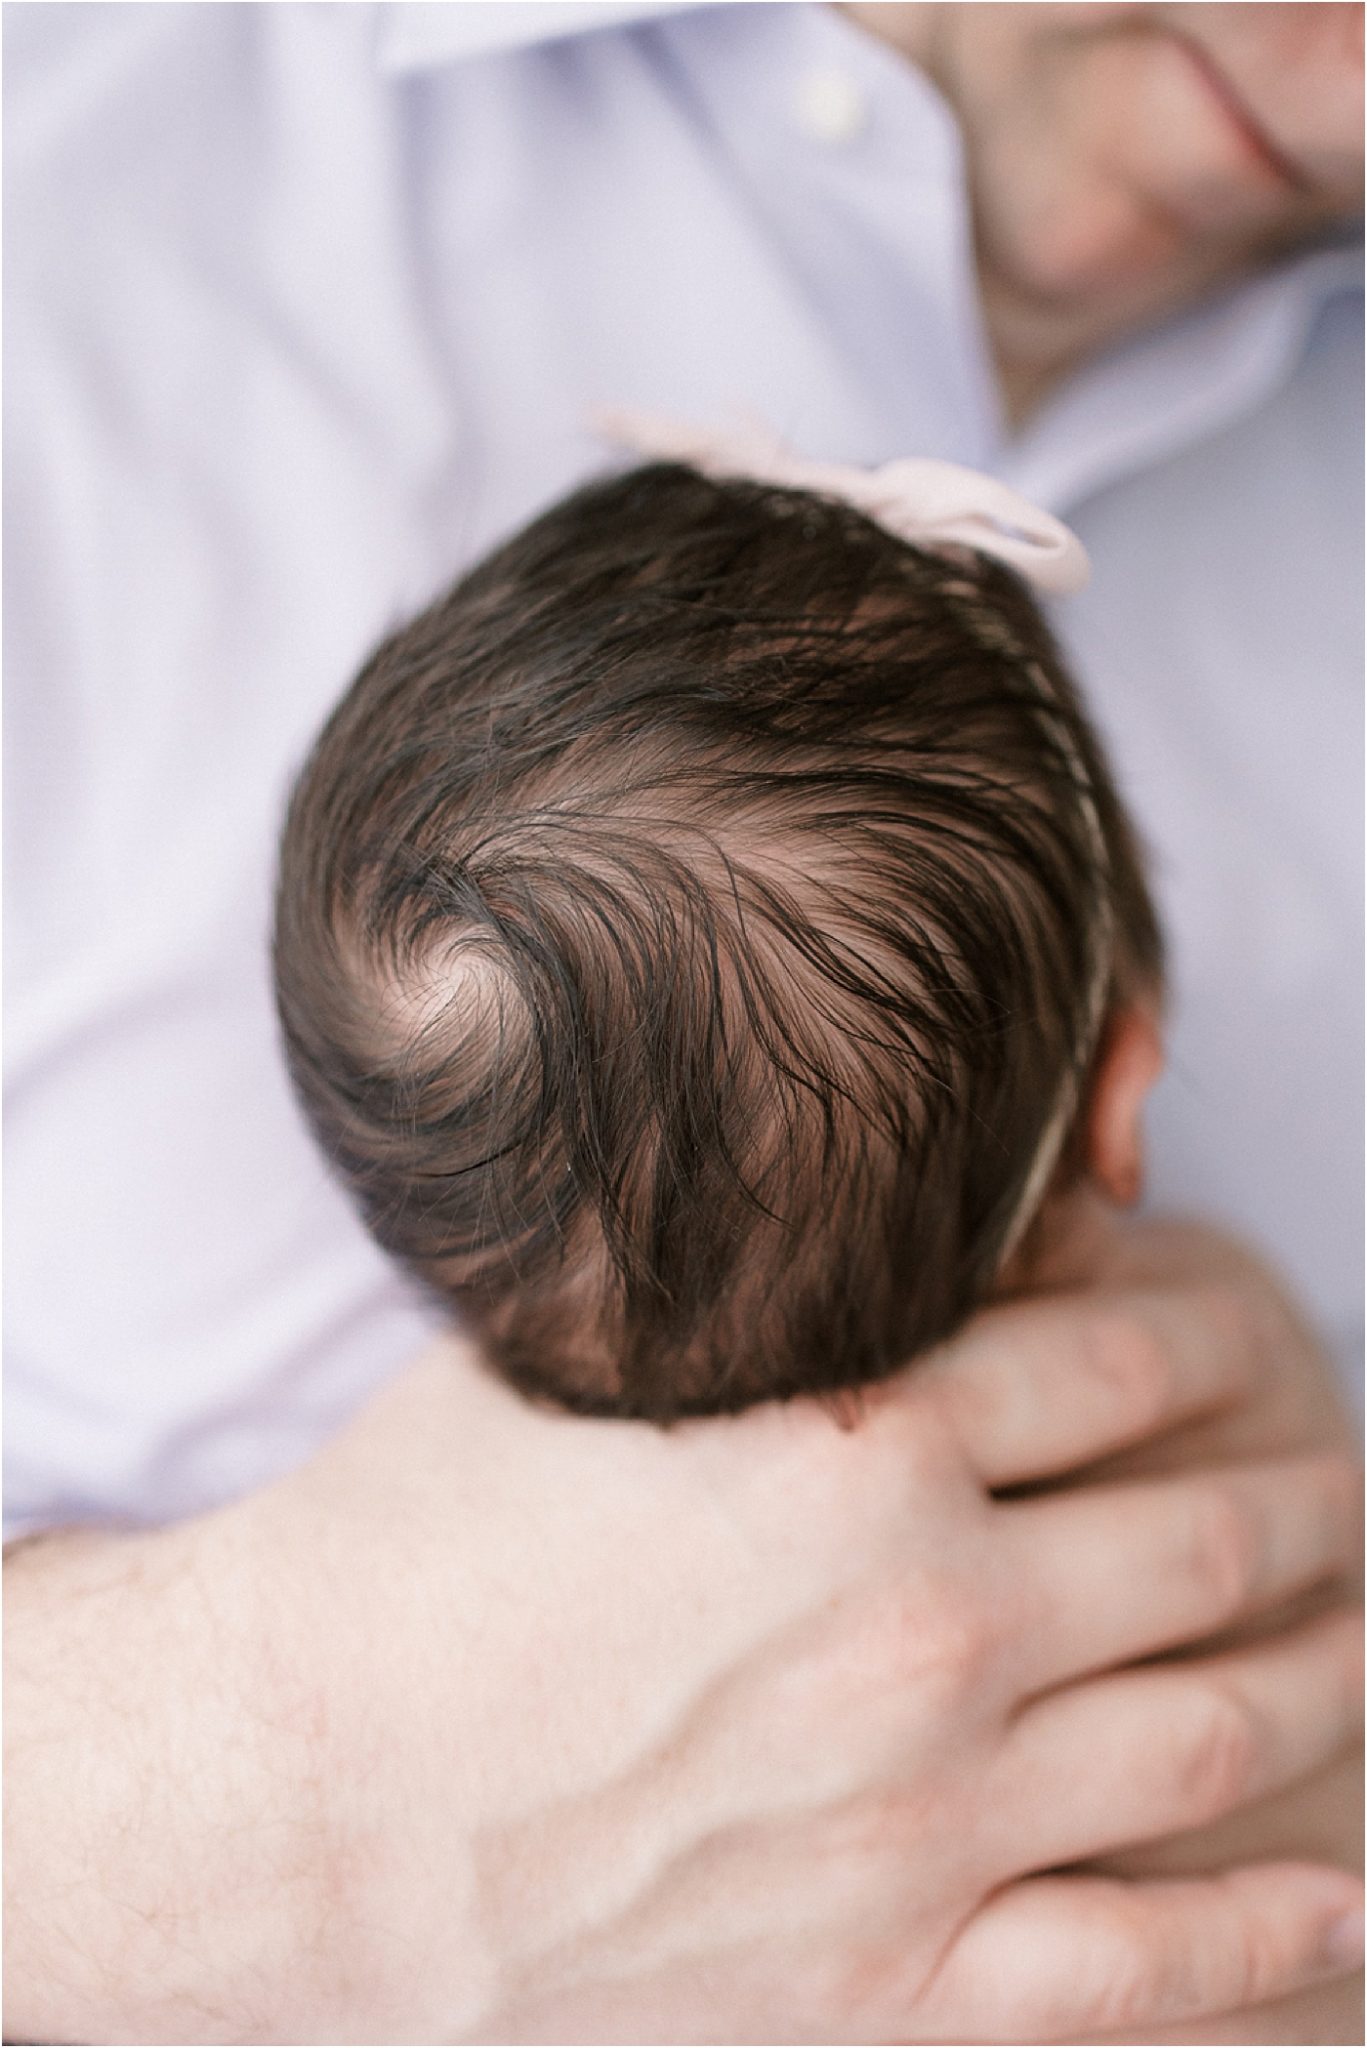 Detail photo of newborns hair | Lindsay Konopa Photography